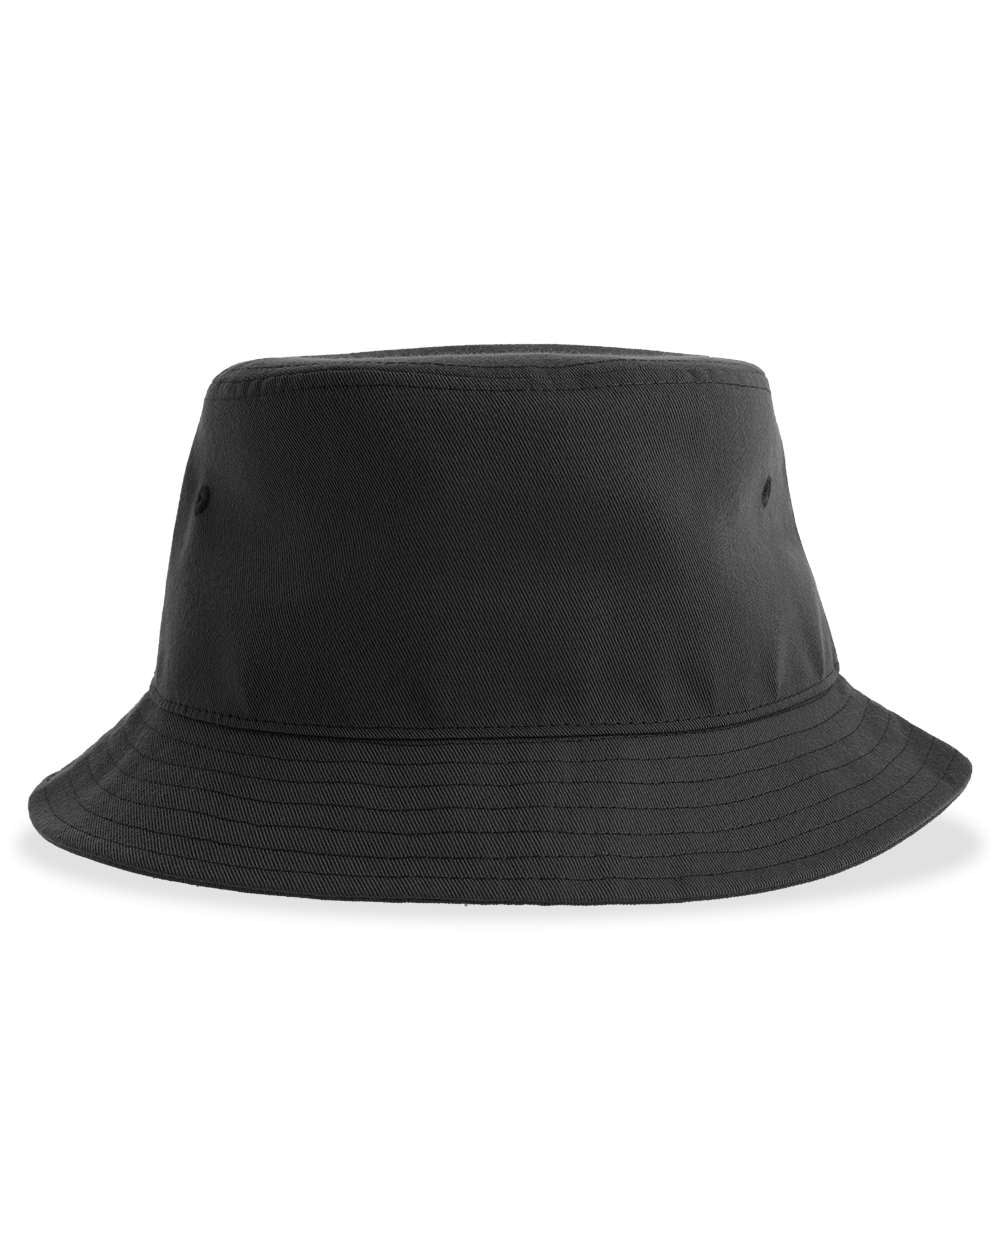 Customizable Atlantis Headwear Geob Bucket Hat in black